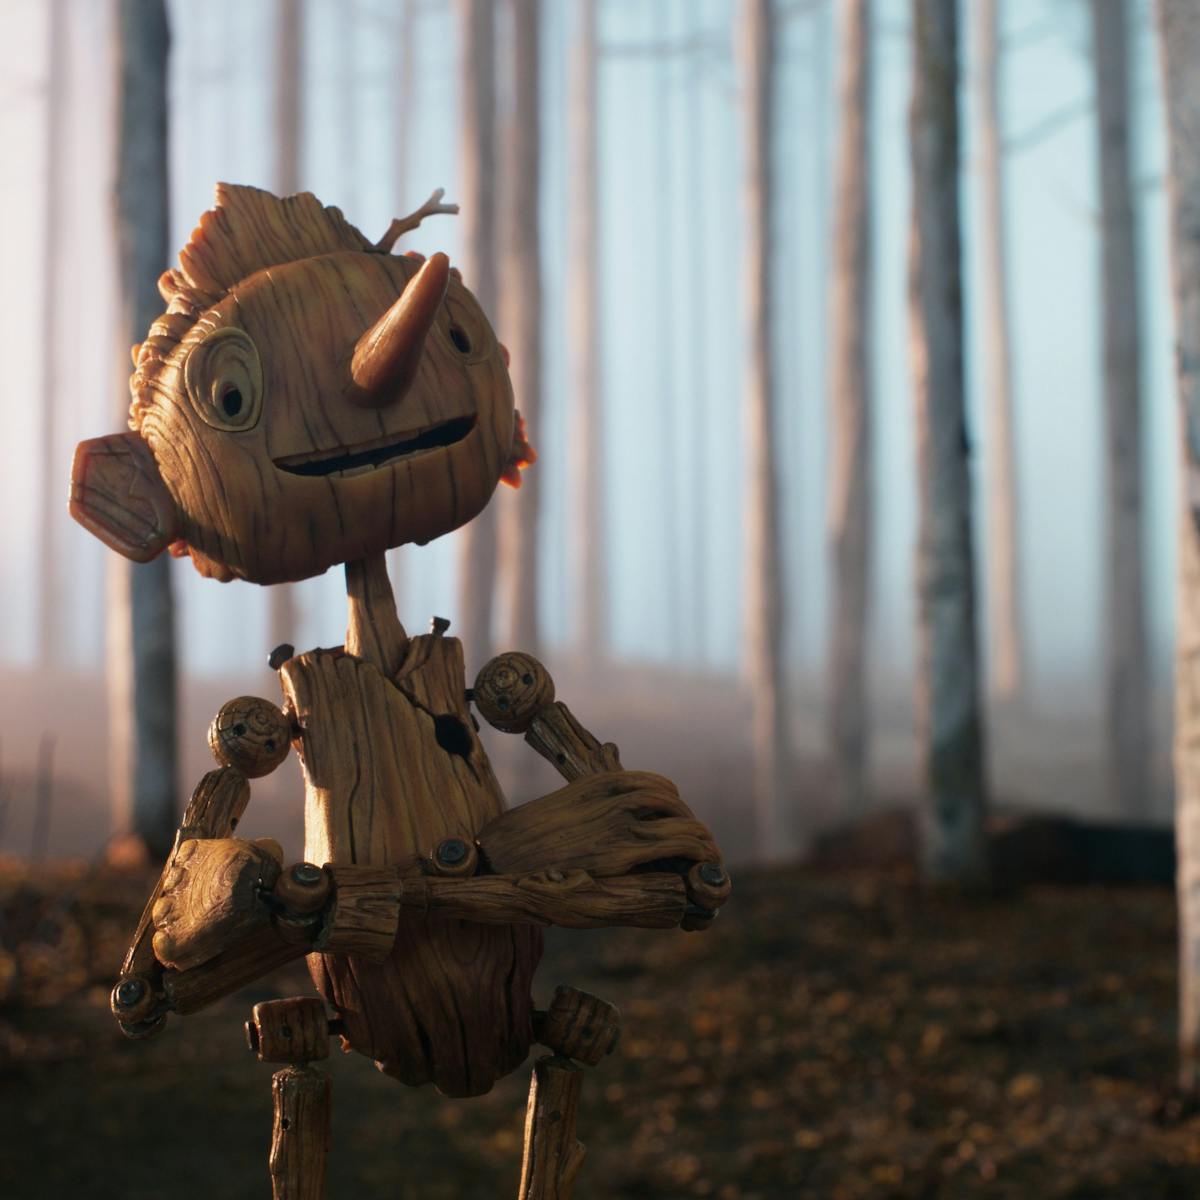 Pinocchio walks through a foggy birch forest smiling.